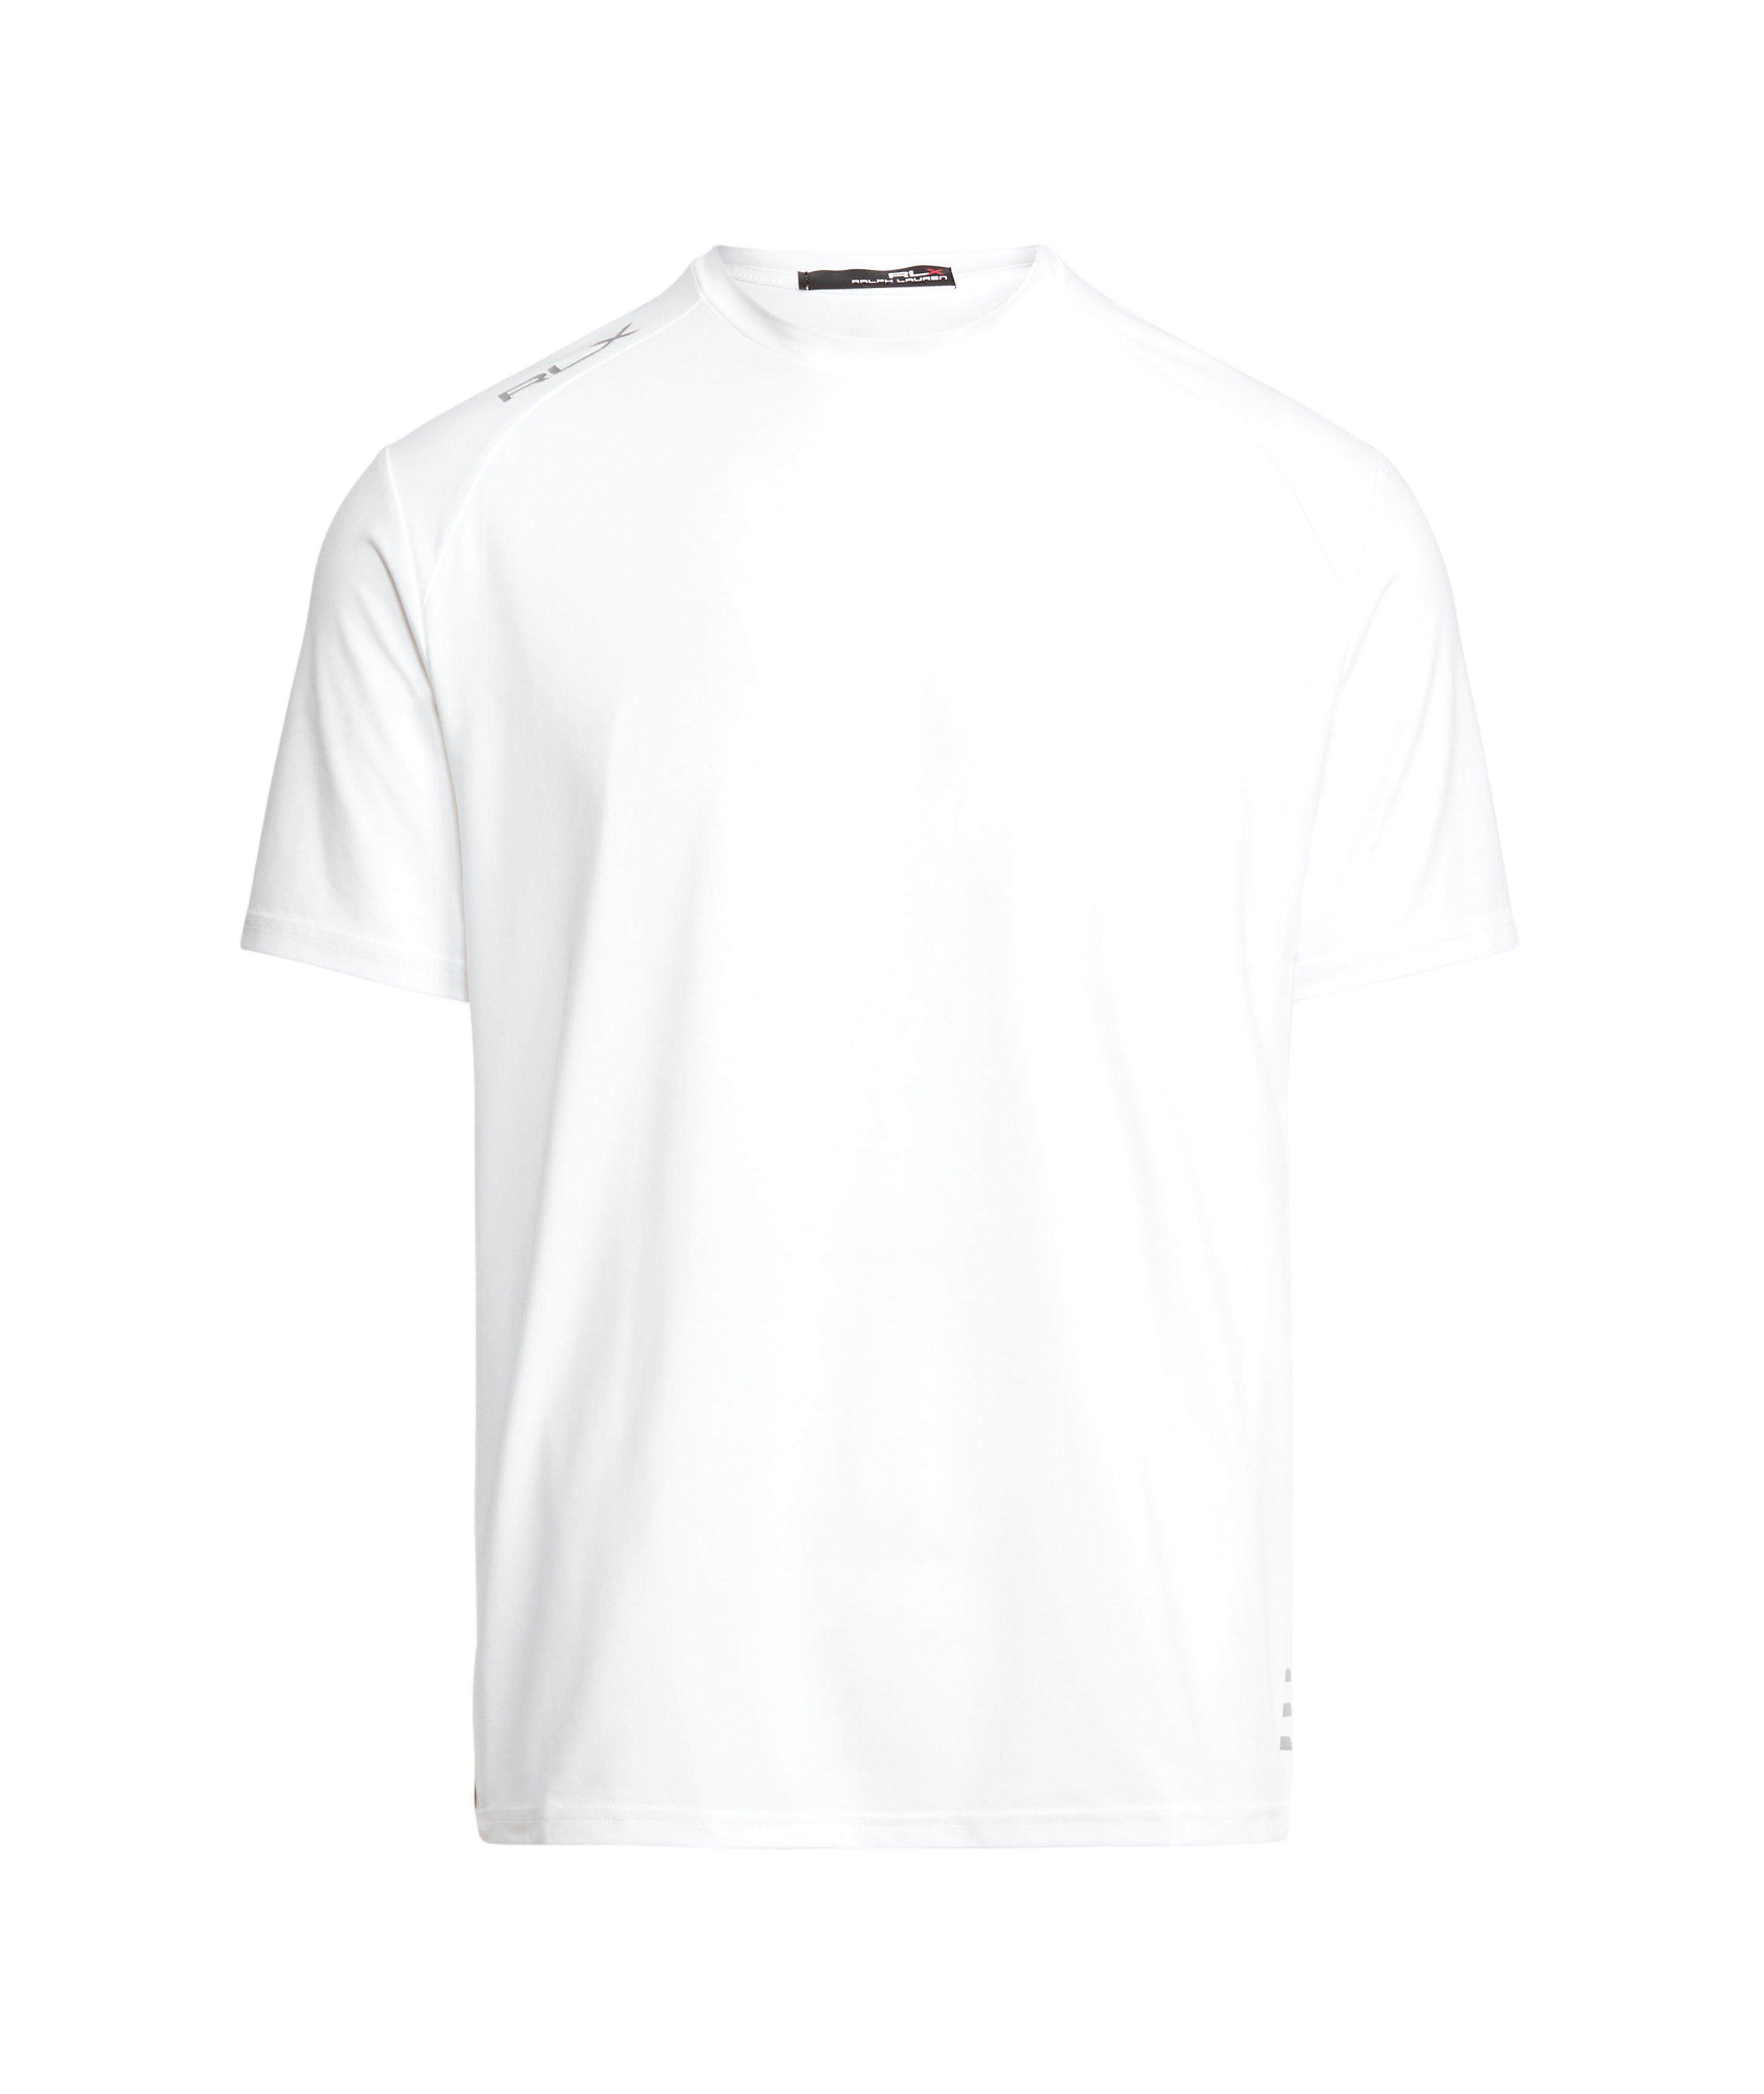 RLX Technical T-Shirt image 0